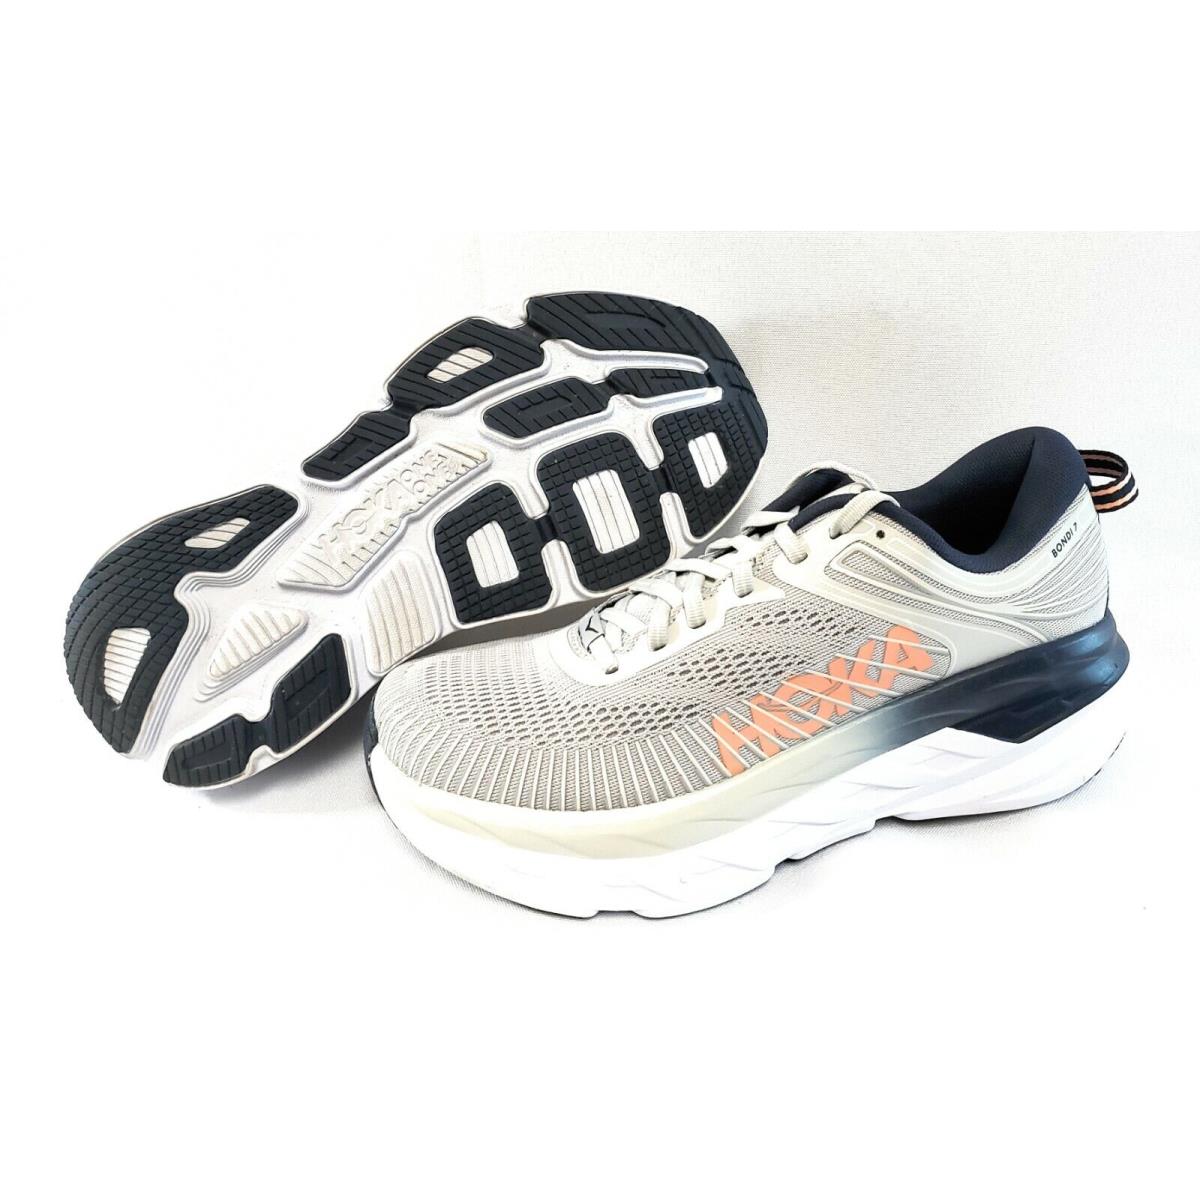 Womens Hoka One One Bondi 7 1110519 Lrbi Lunar Rock Iris Running Sneakers Shoes